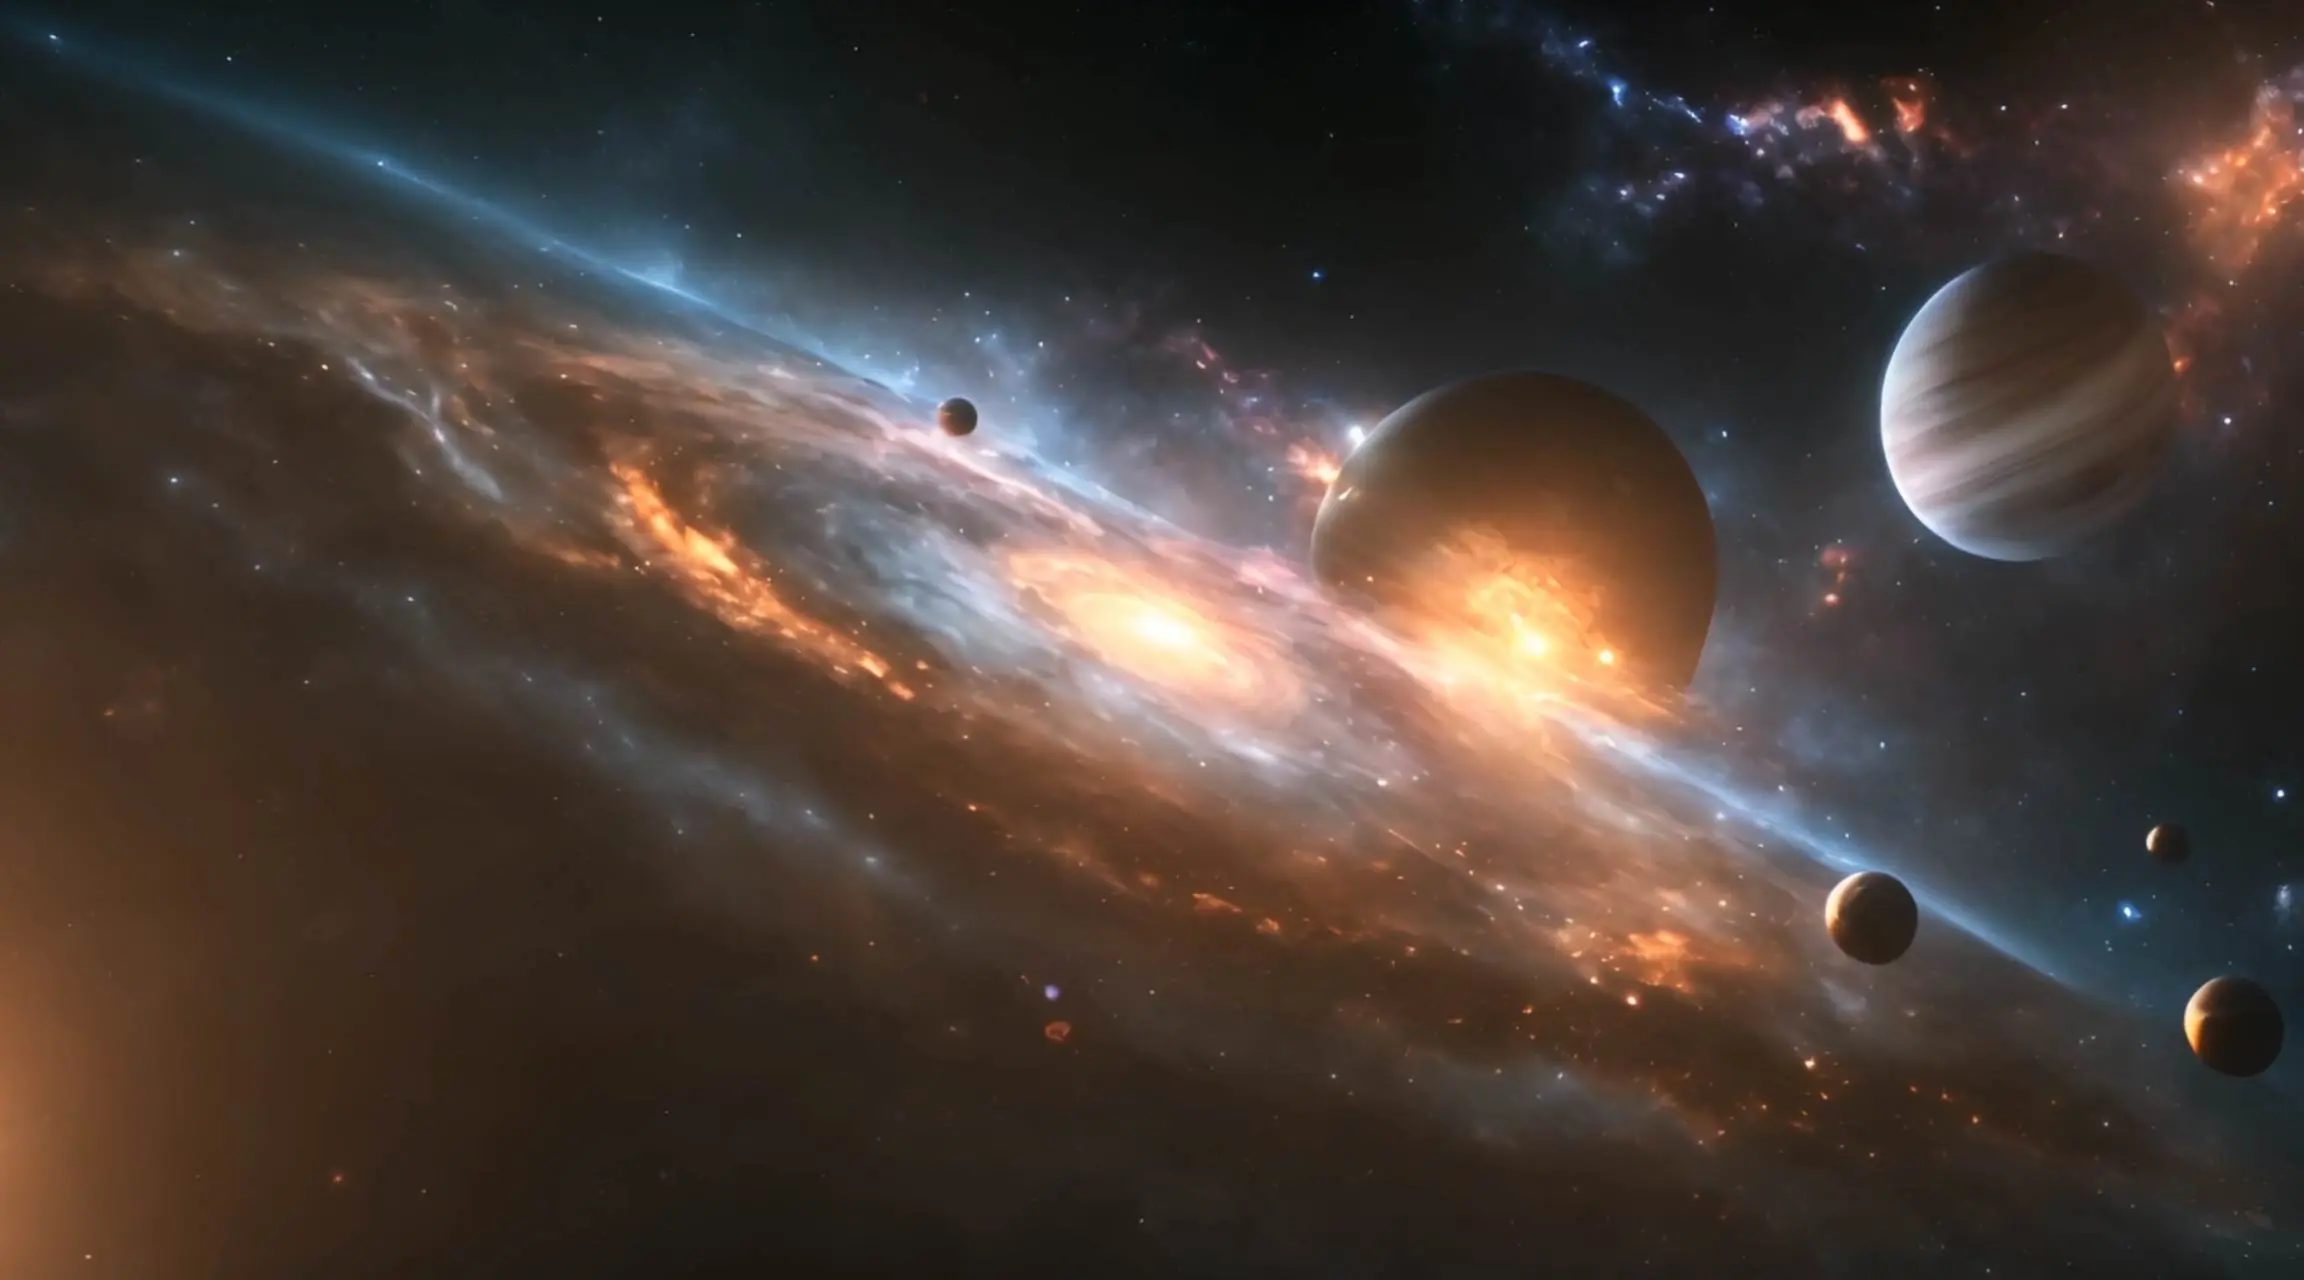 Epic Space Odyssey Planets and Stellar Nebula Animation